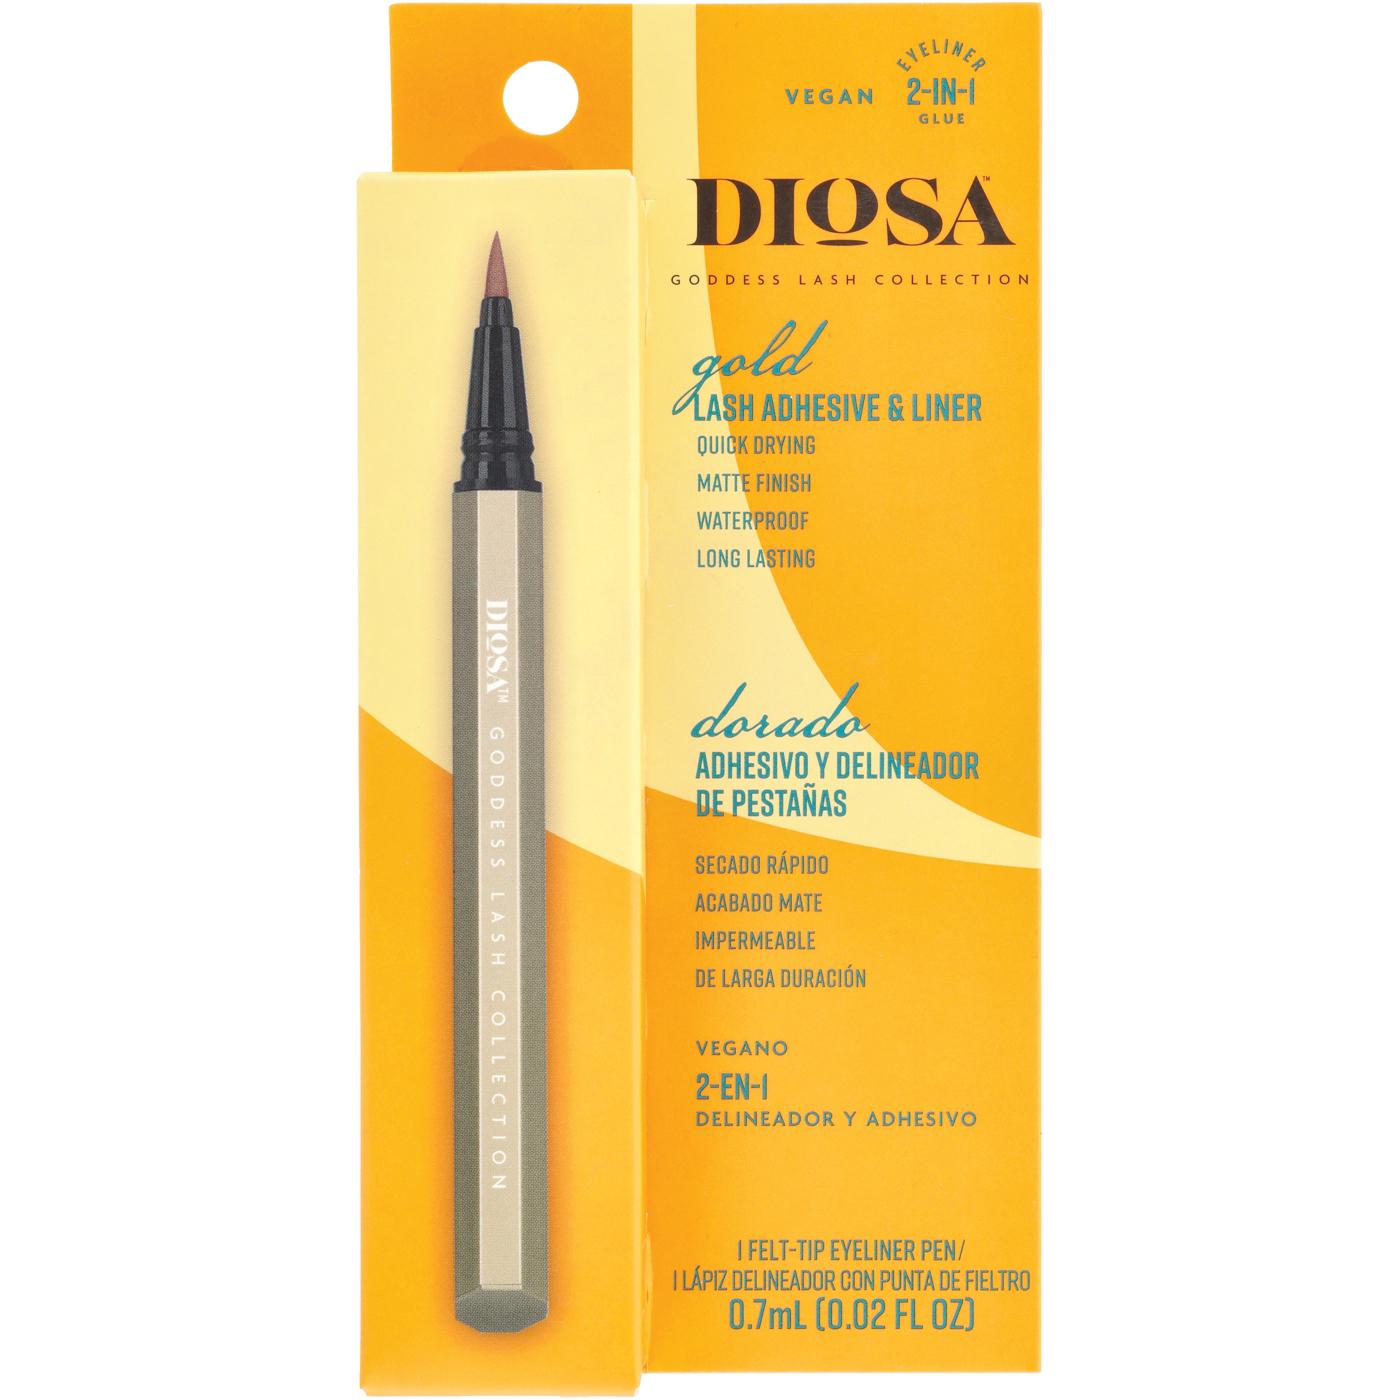 Diosa Lash Adhesive & Liner – Gold; image 1 of 4